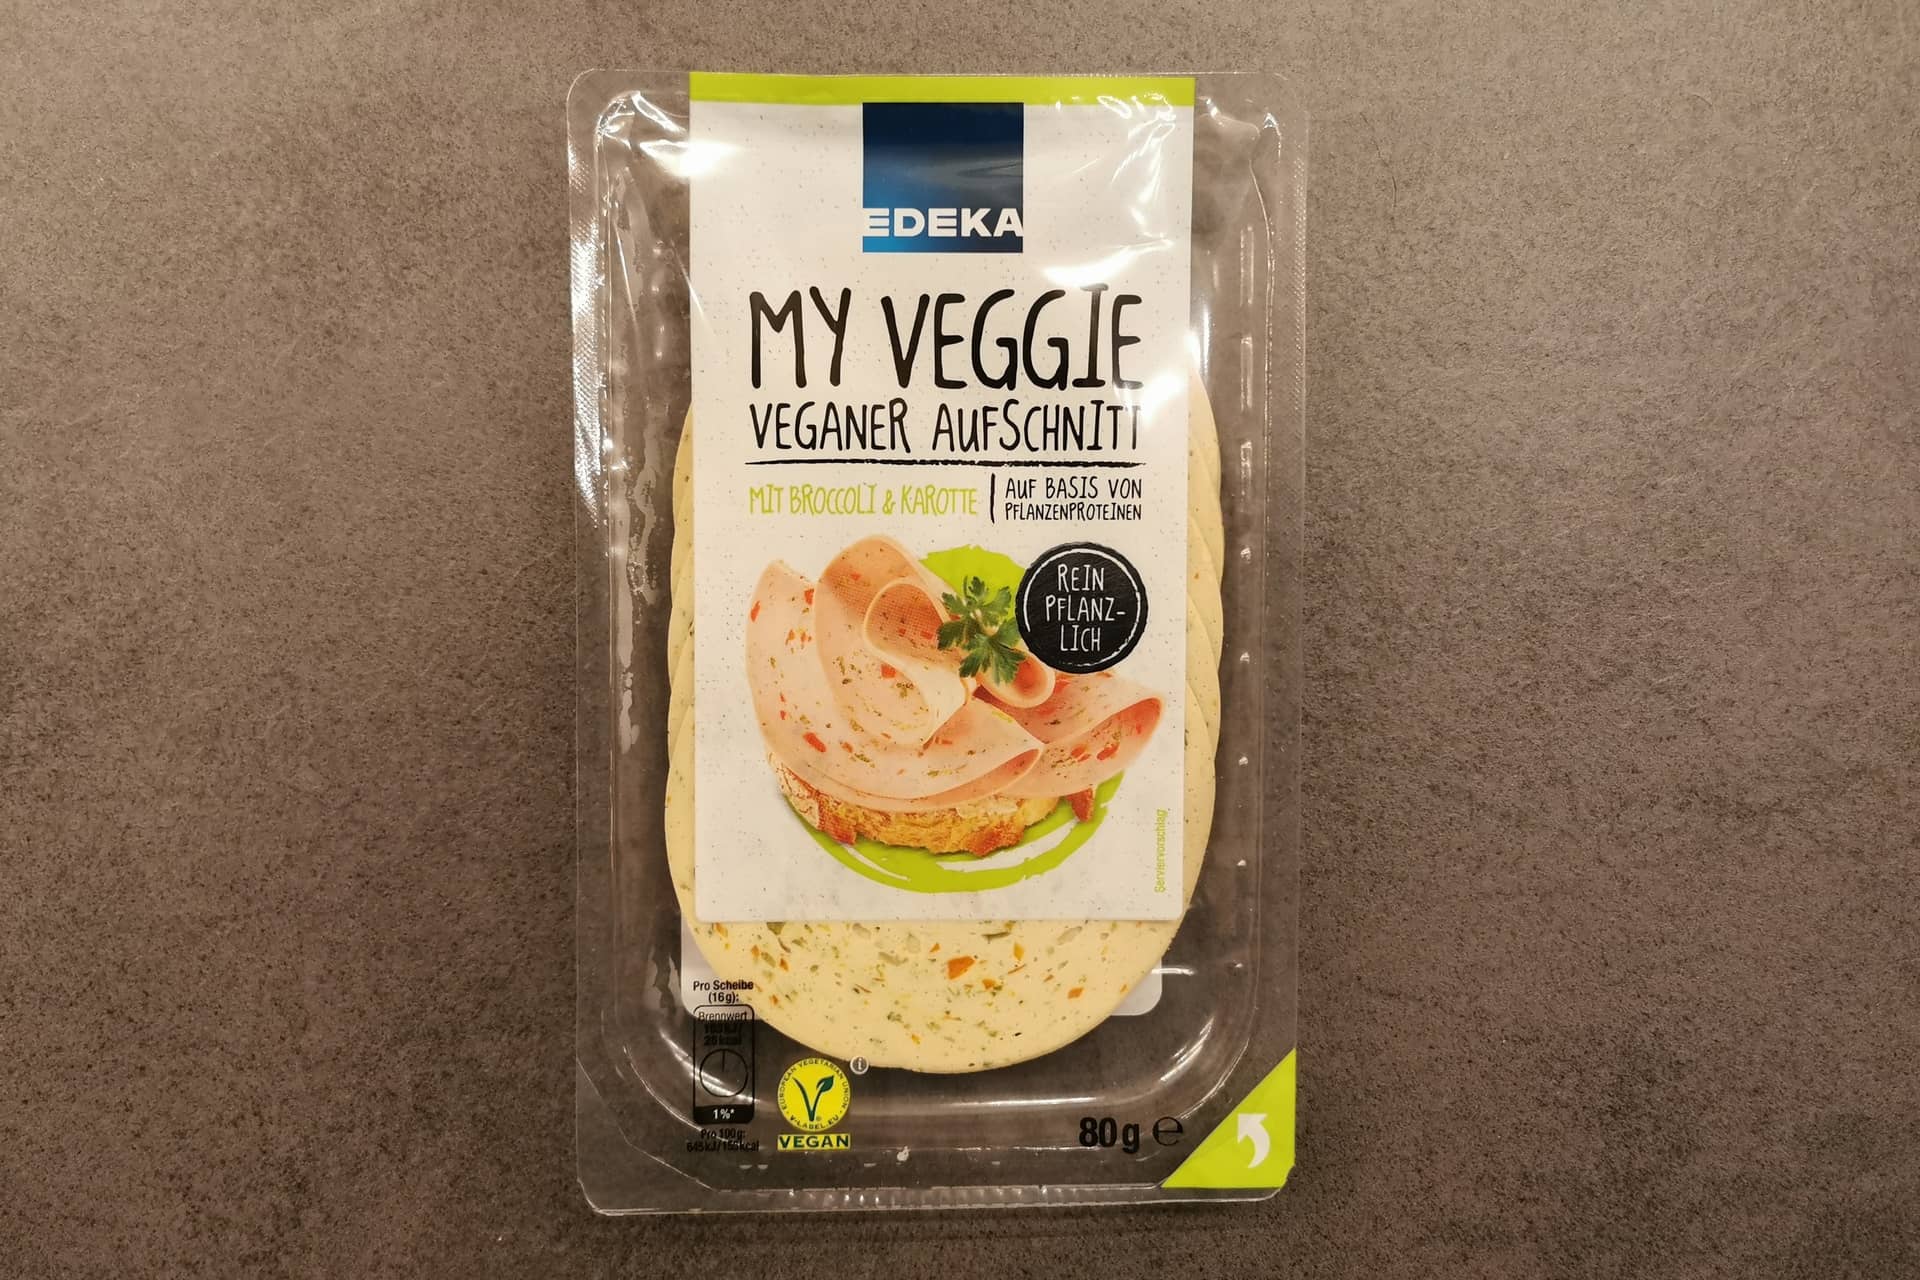 My Veggie: Veganer Aufschnitt Broccoli Karotte